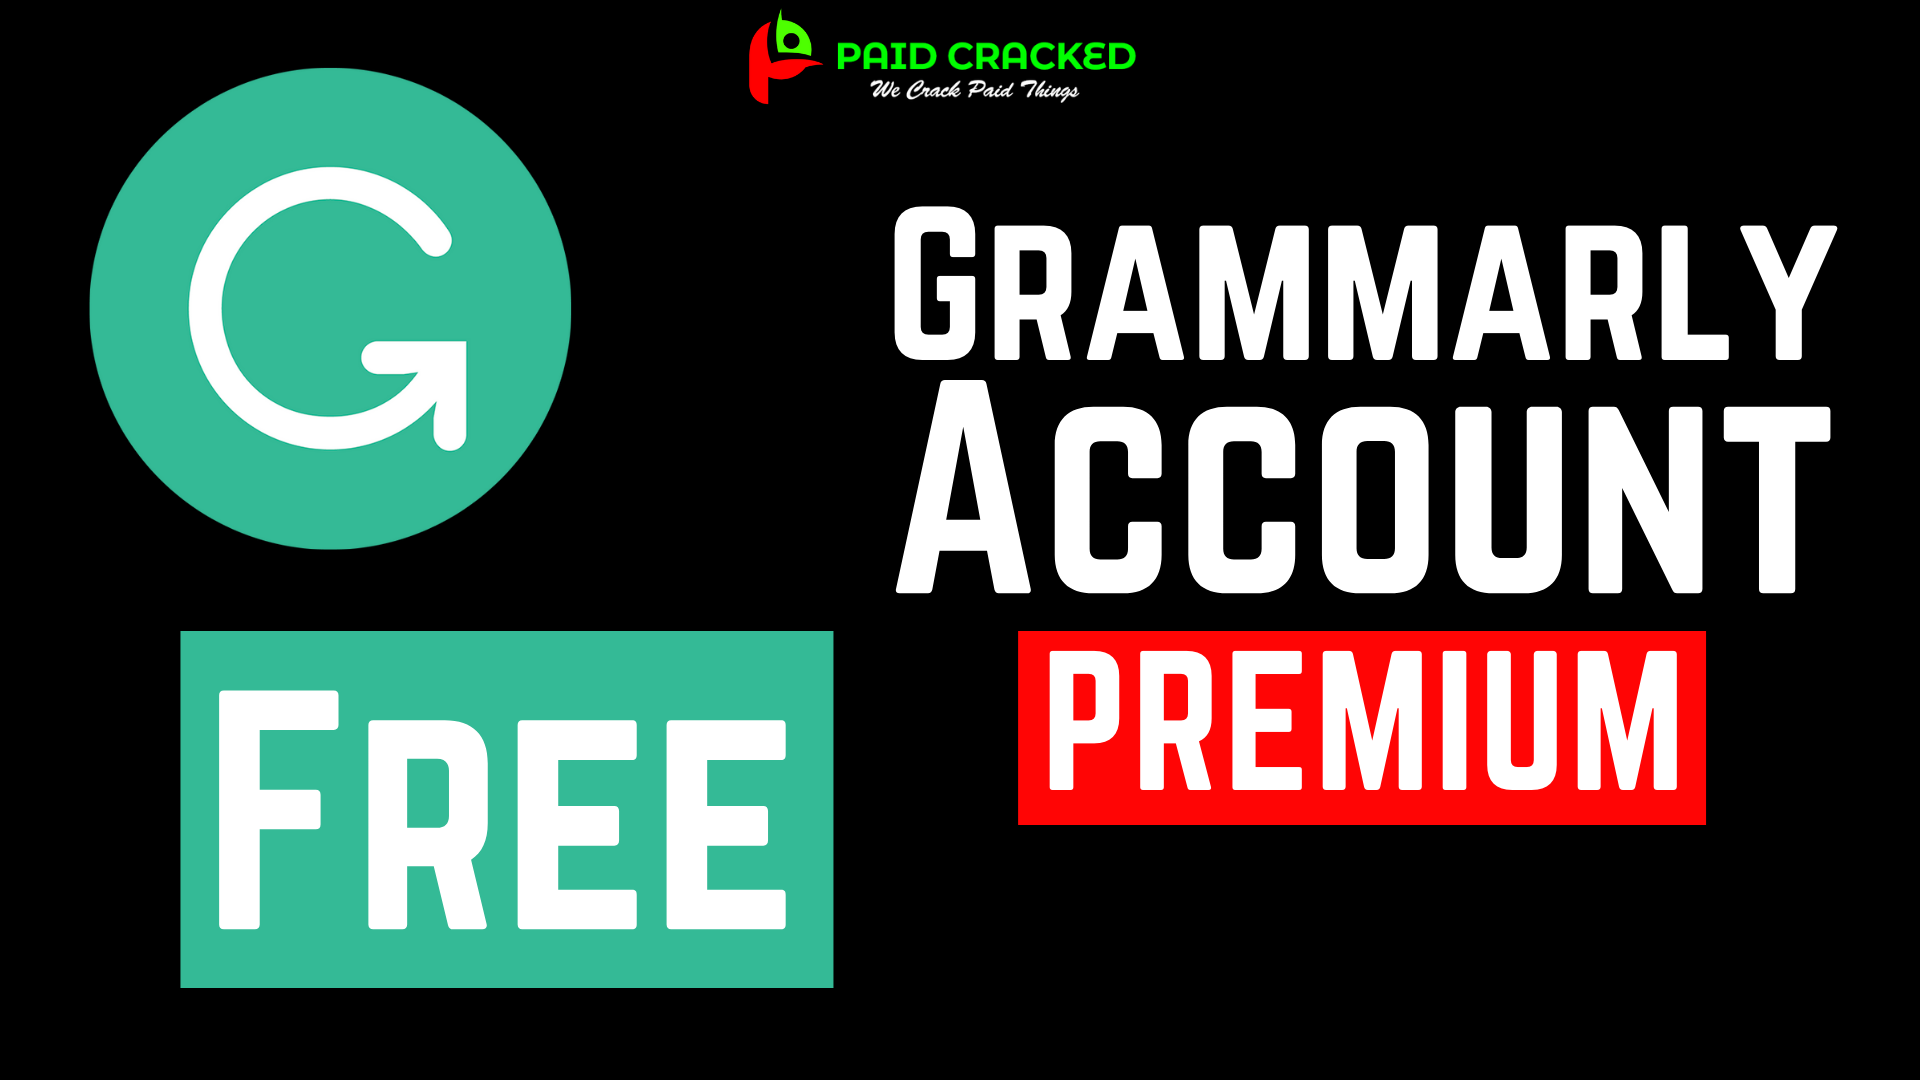 free grammarly premium account 2019 reddit